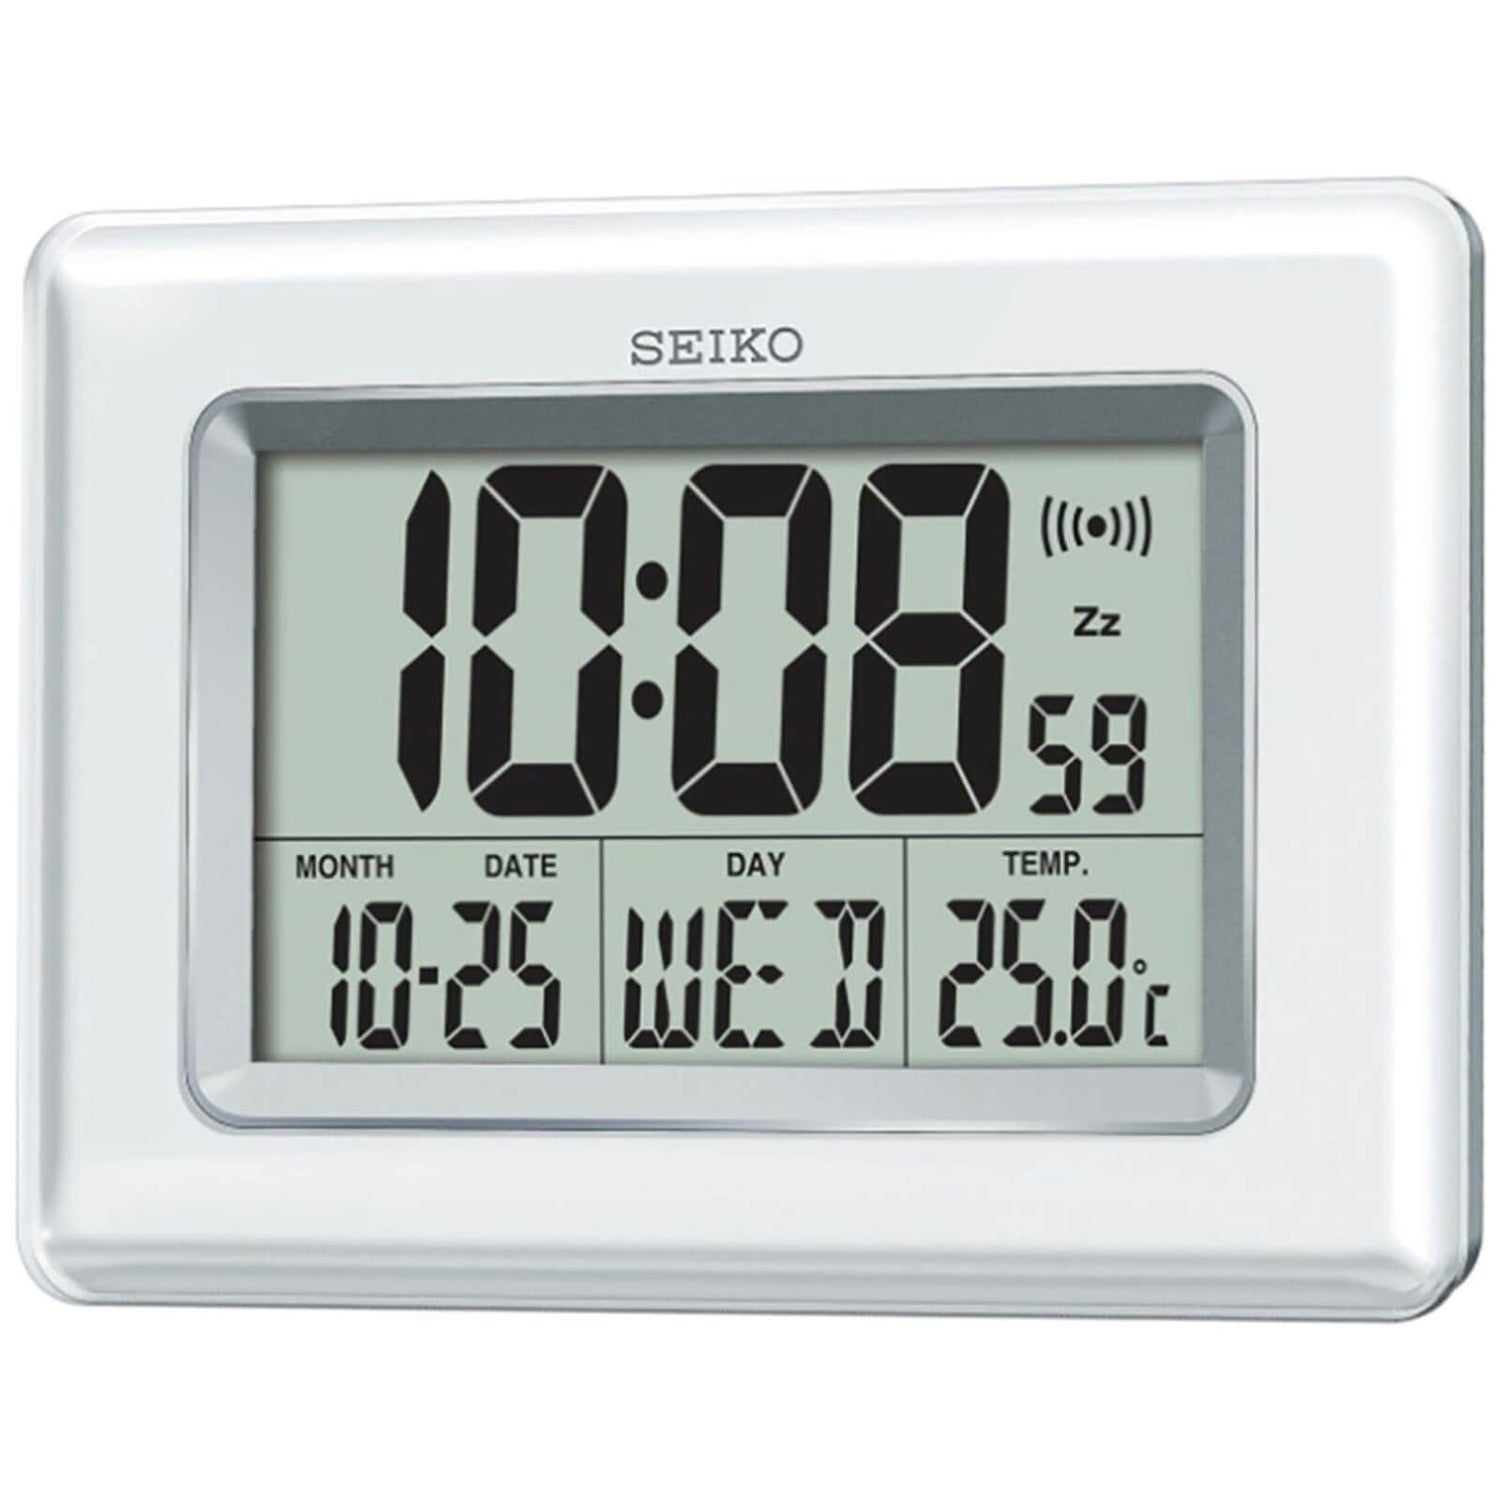 Seiko Digital LCD Clock - White | Homebase